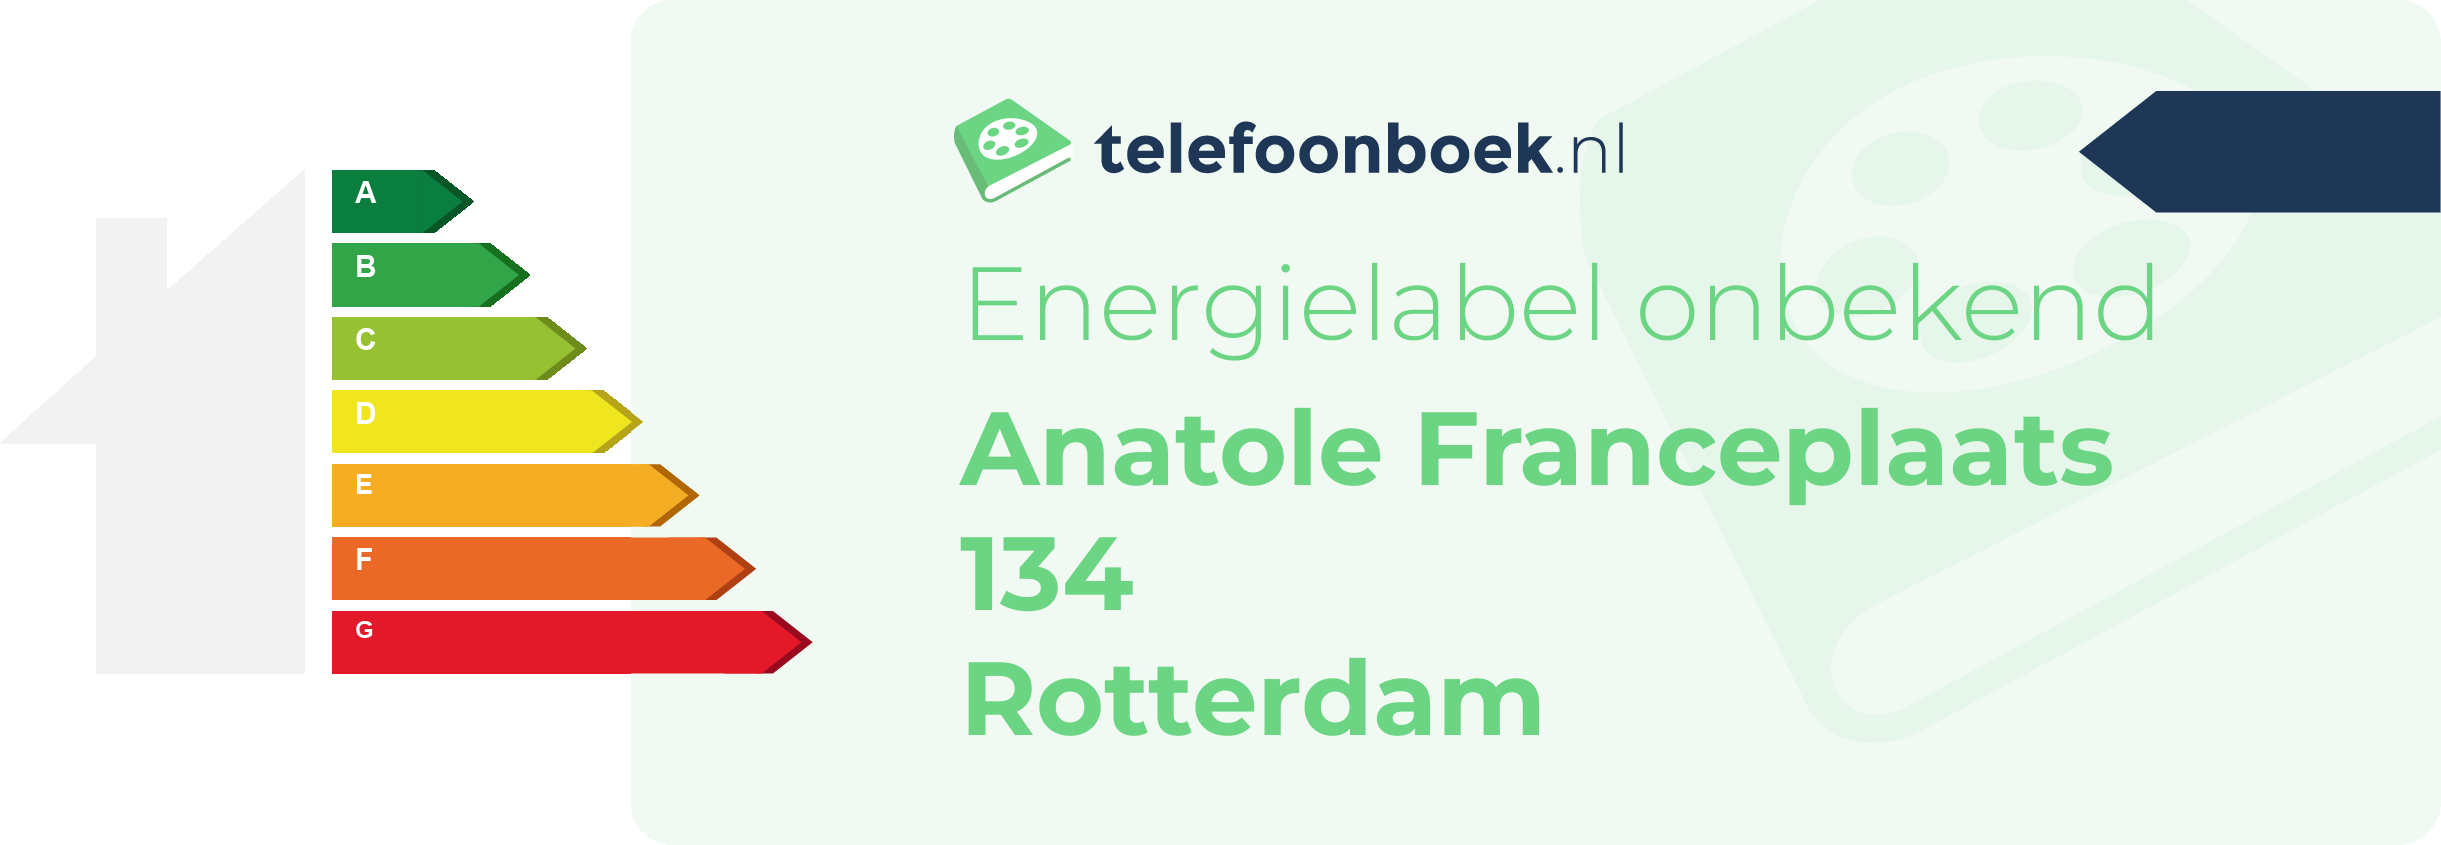 Energielabel Anatole Franceplaats 134 Rotterdam